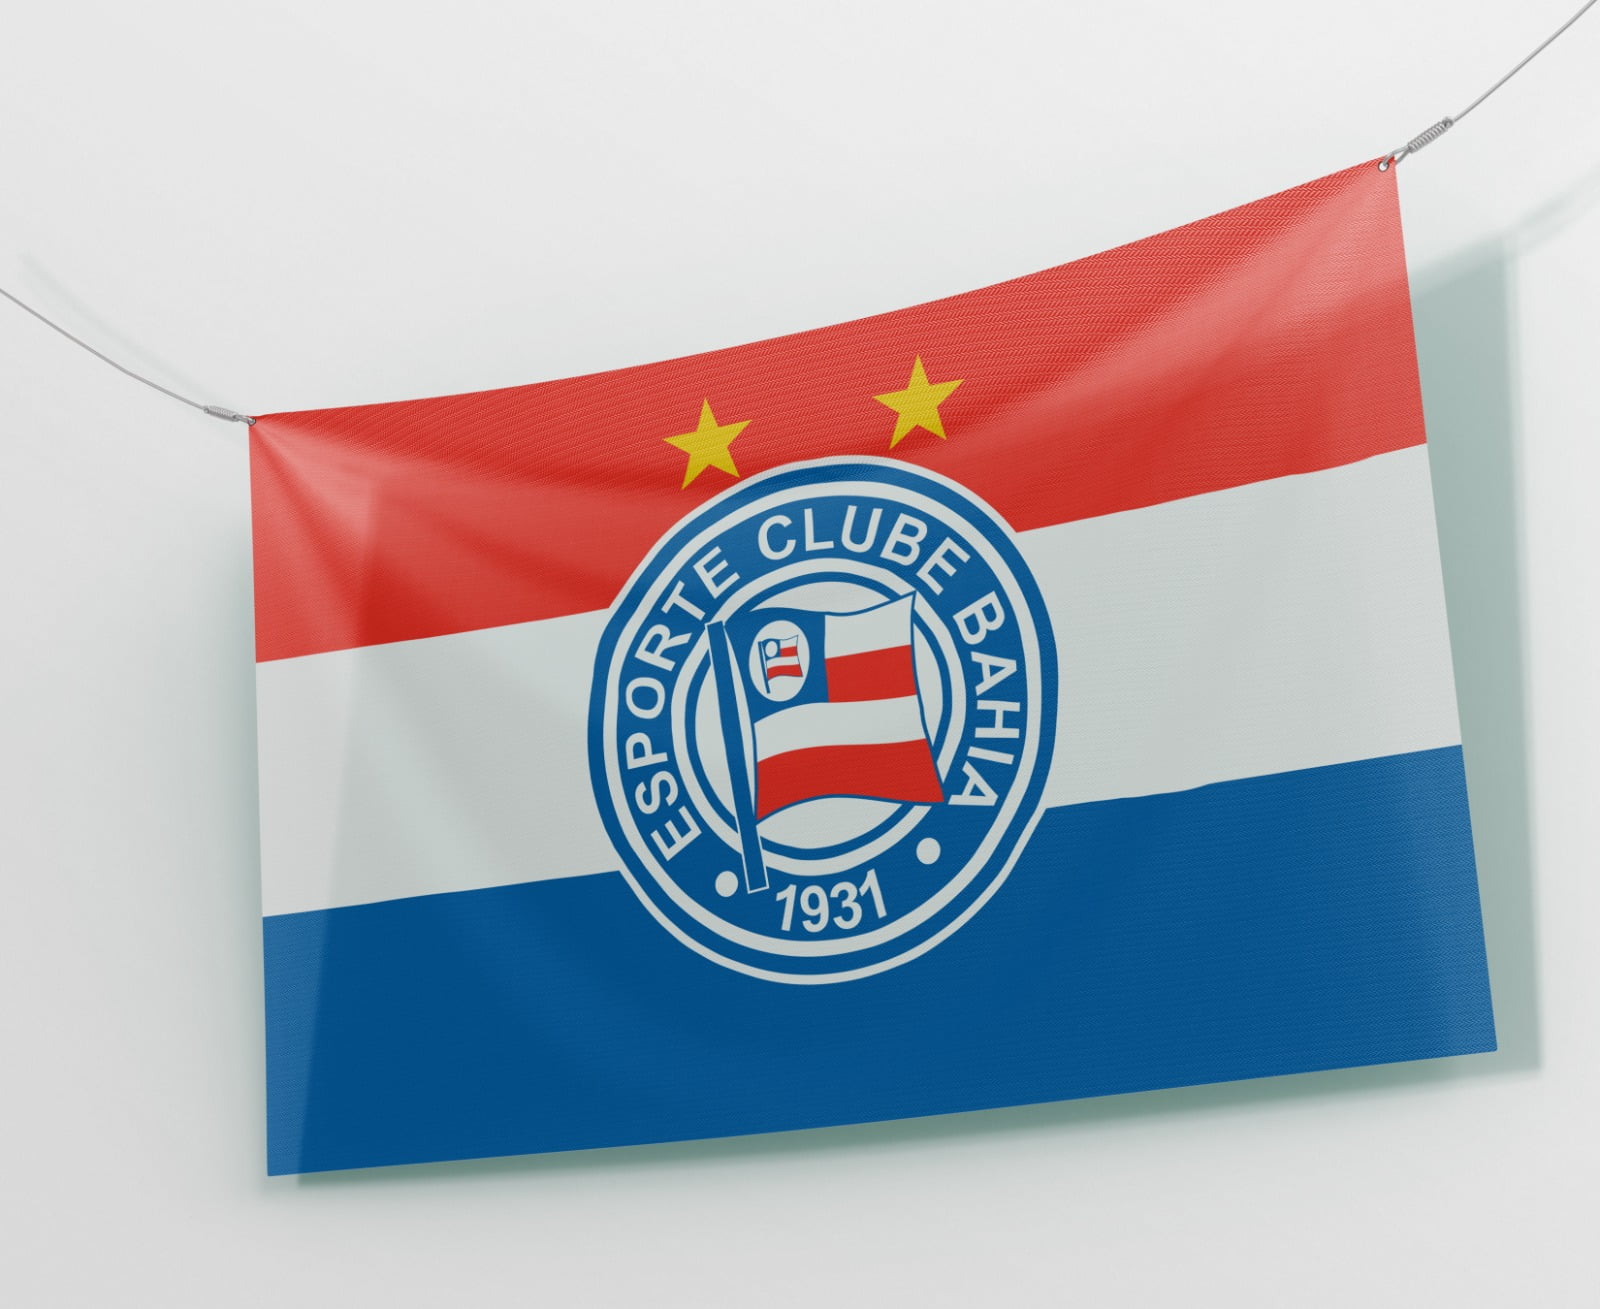 Bandeira Esporte Clube Bahia